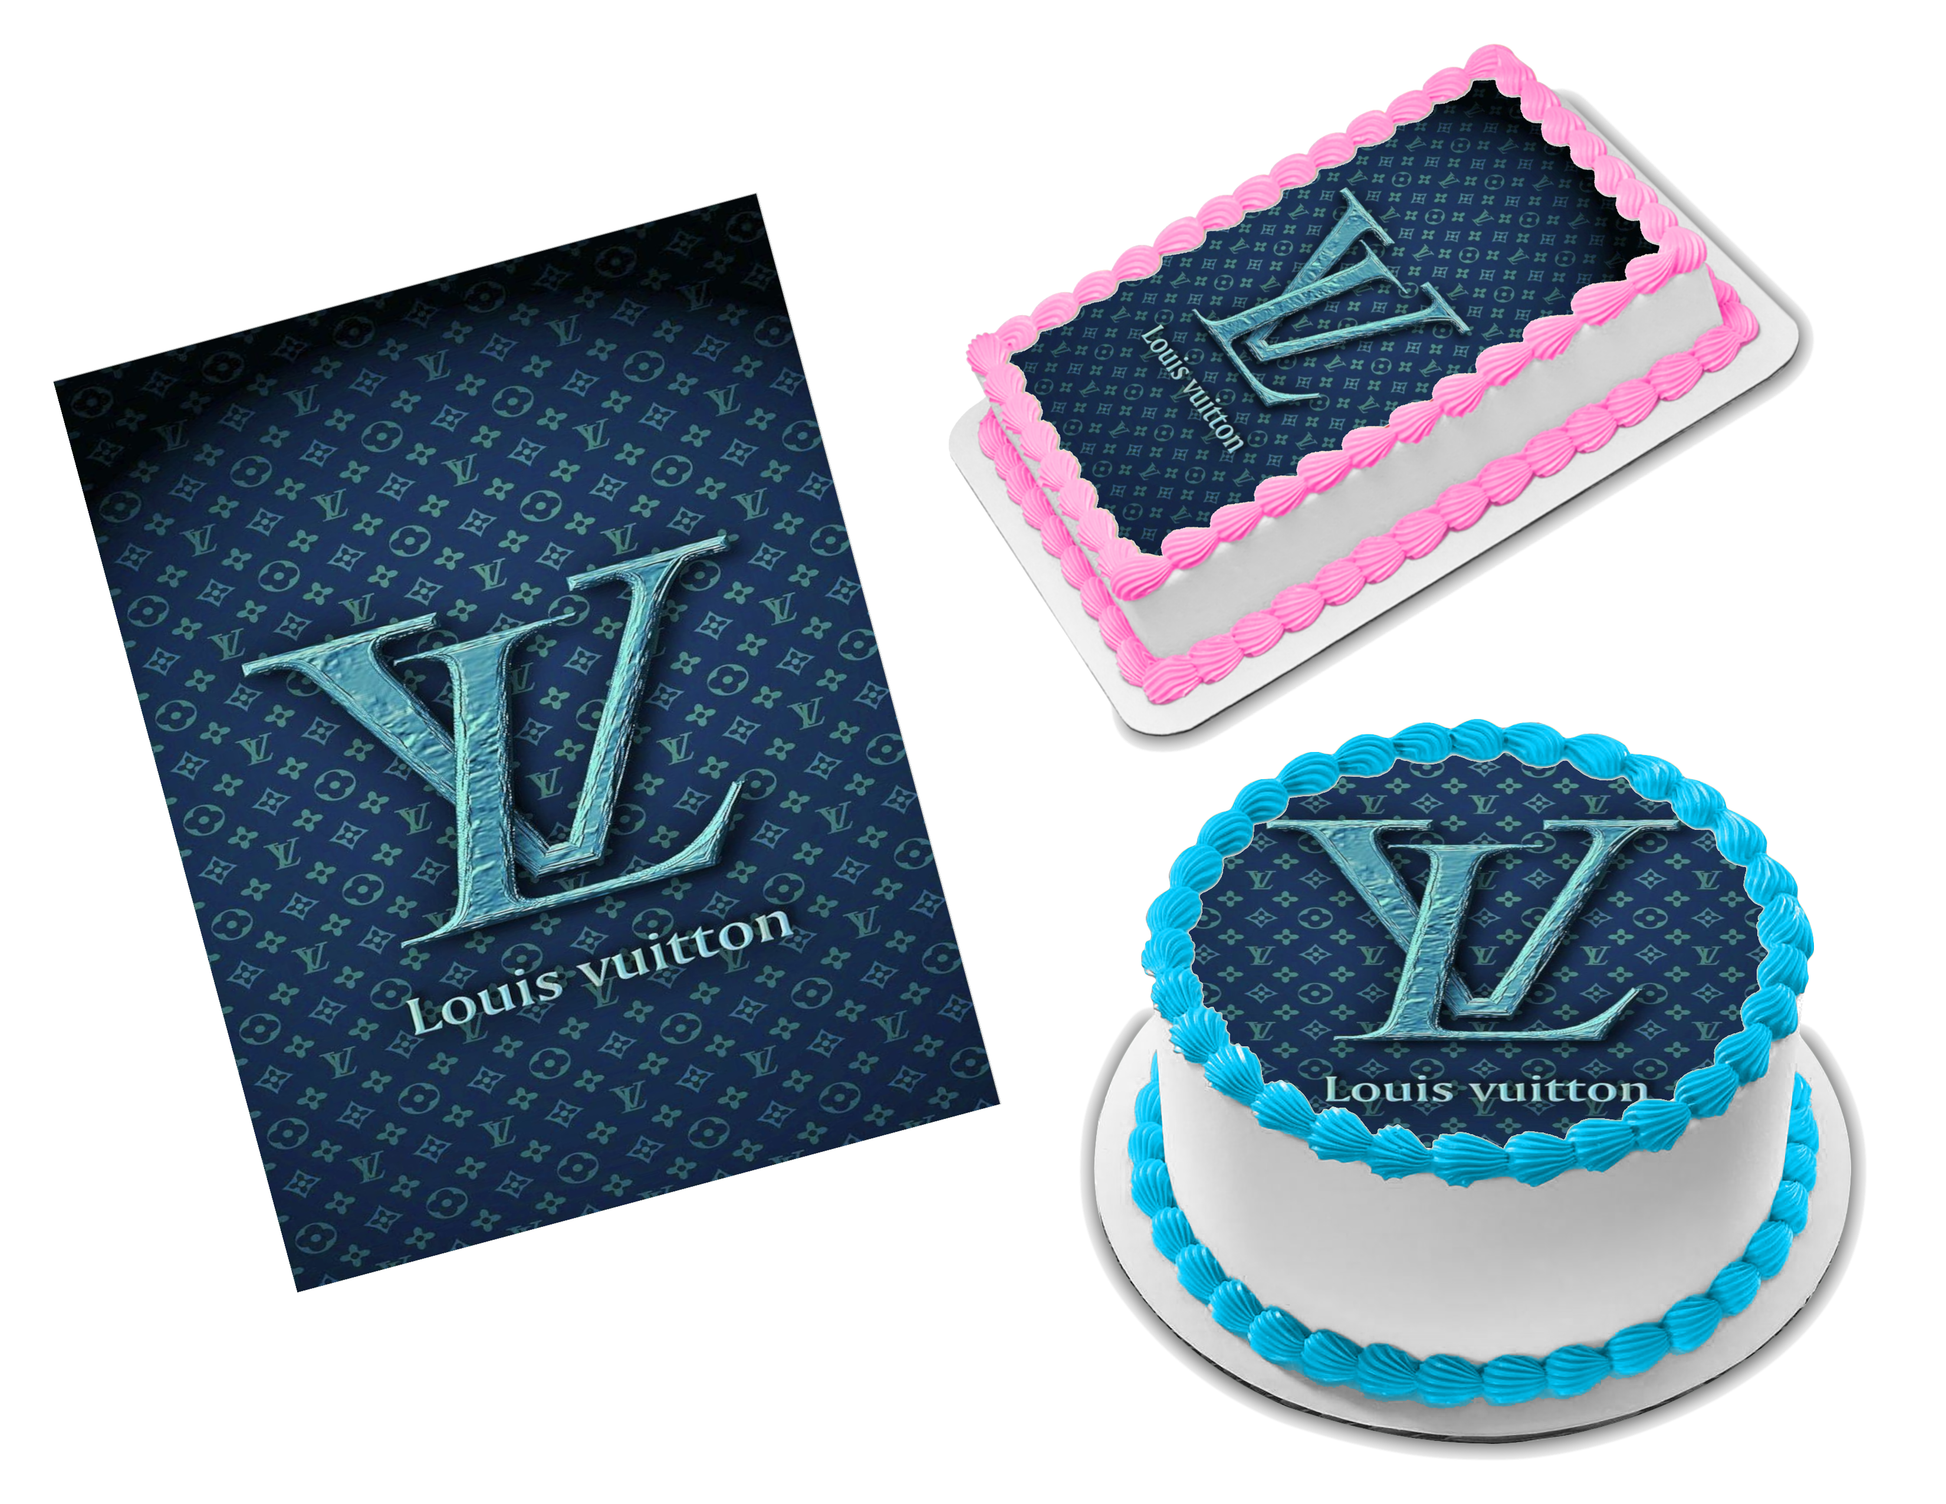 Louis Vuitton Purple Edible Image Frosting Sheet #10 (70+ sizes